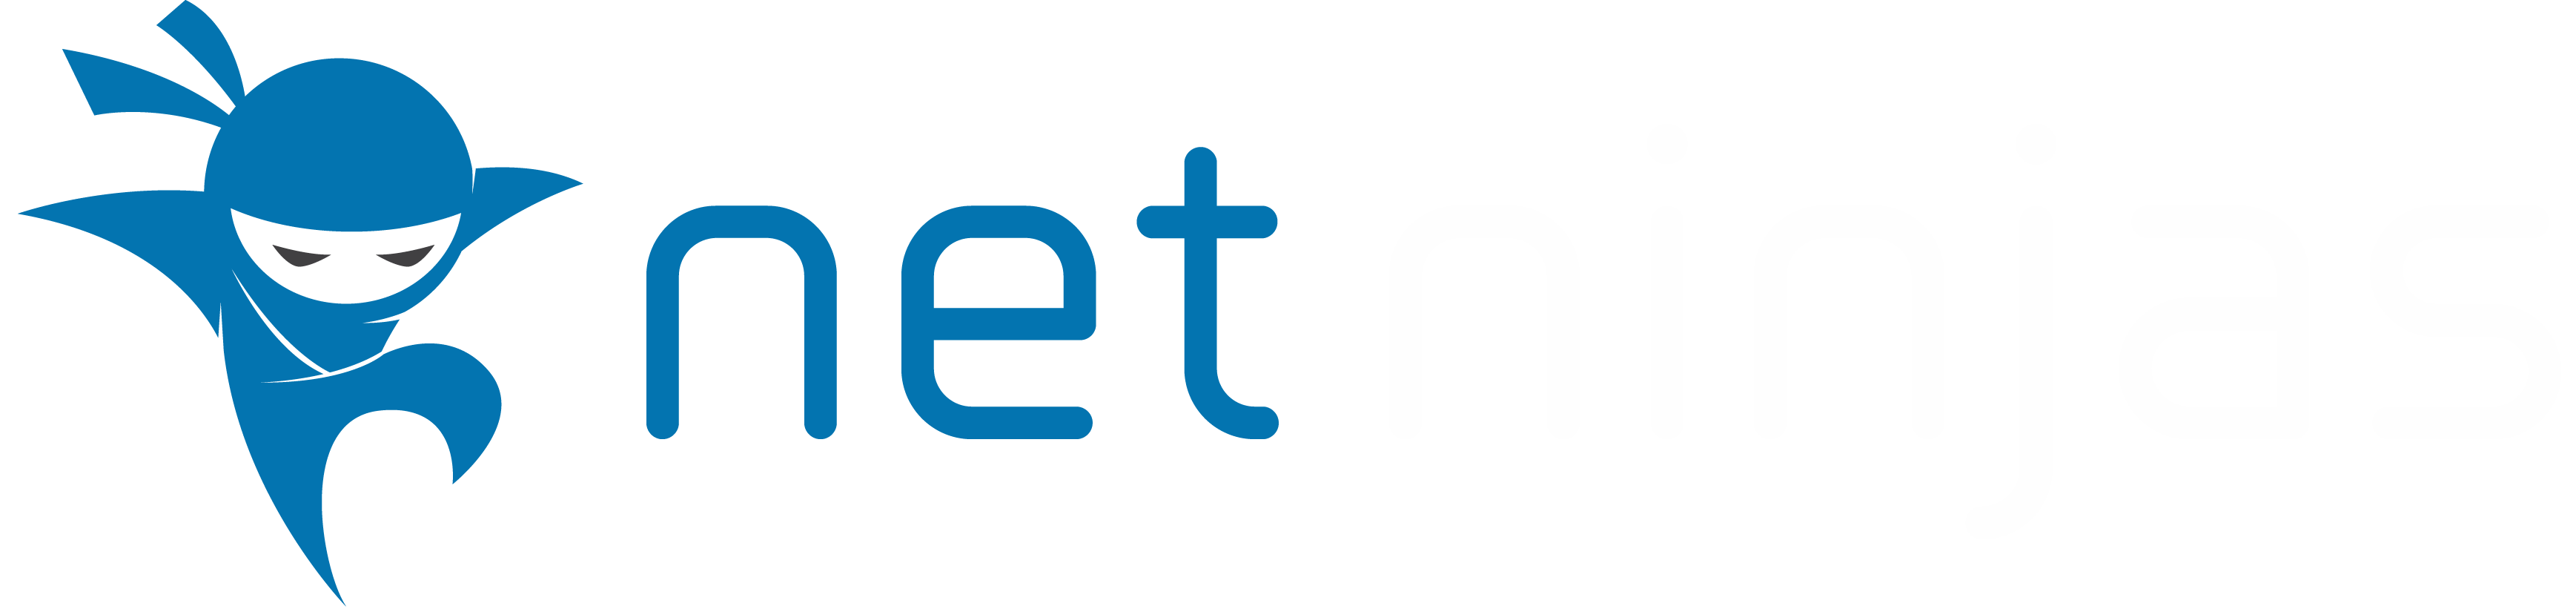 NetNinjas Logo White